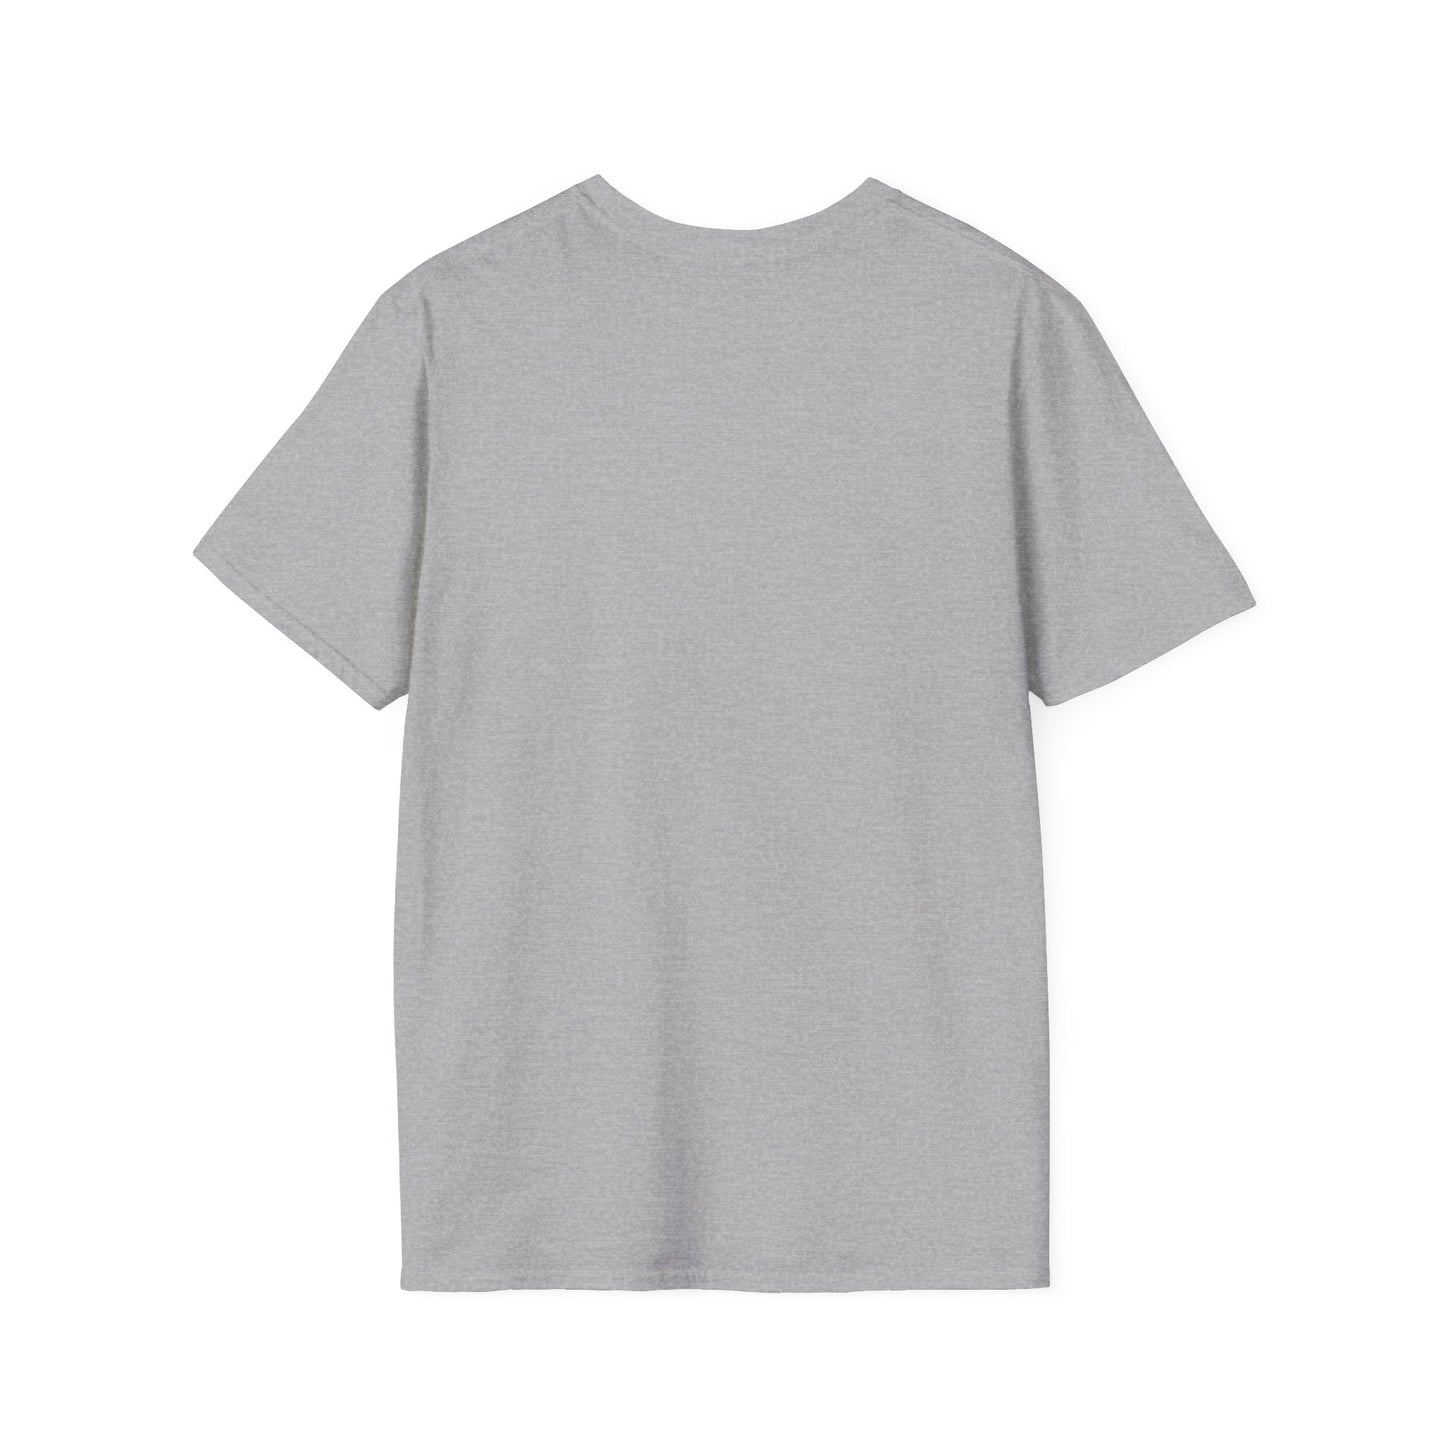 (Not a) Mimic Unisex Softstyle T-Shirt